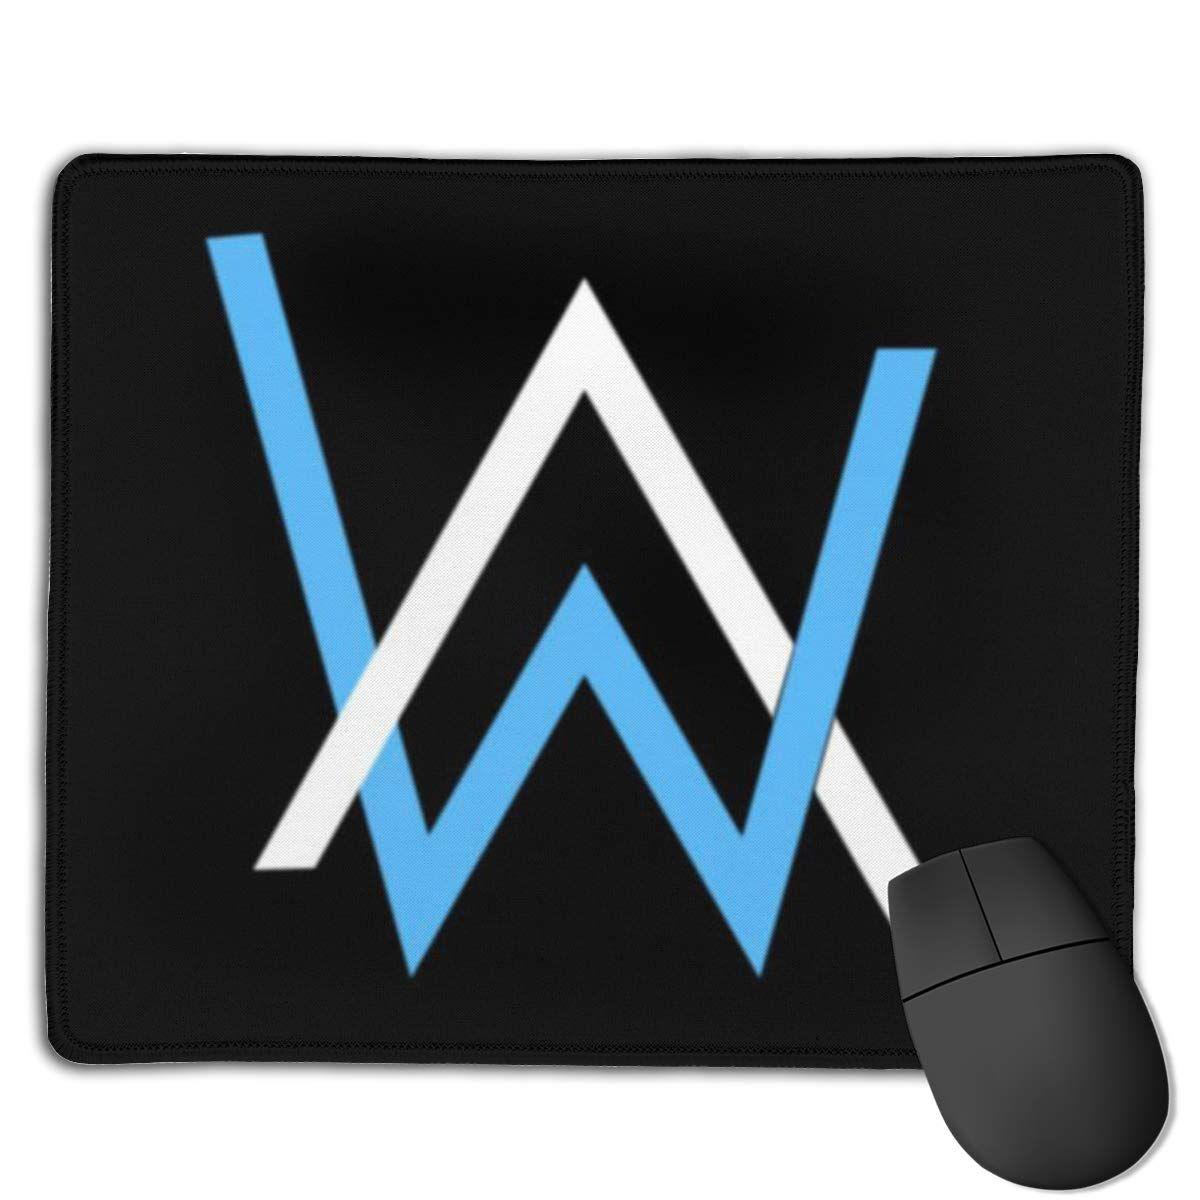 Walker Logo - Amazon.com : Alan Walker Logo Personality Mouse Pad Gaming Anti Slip